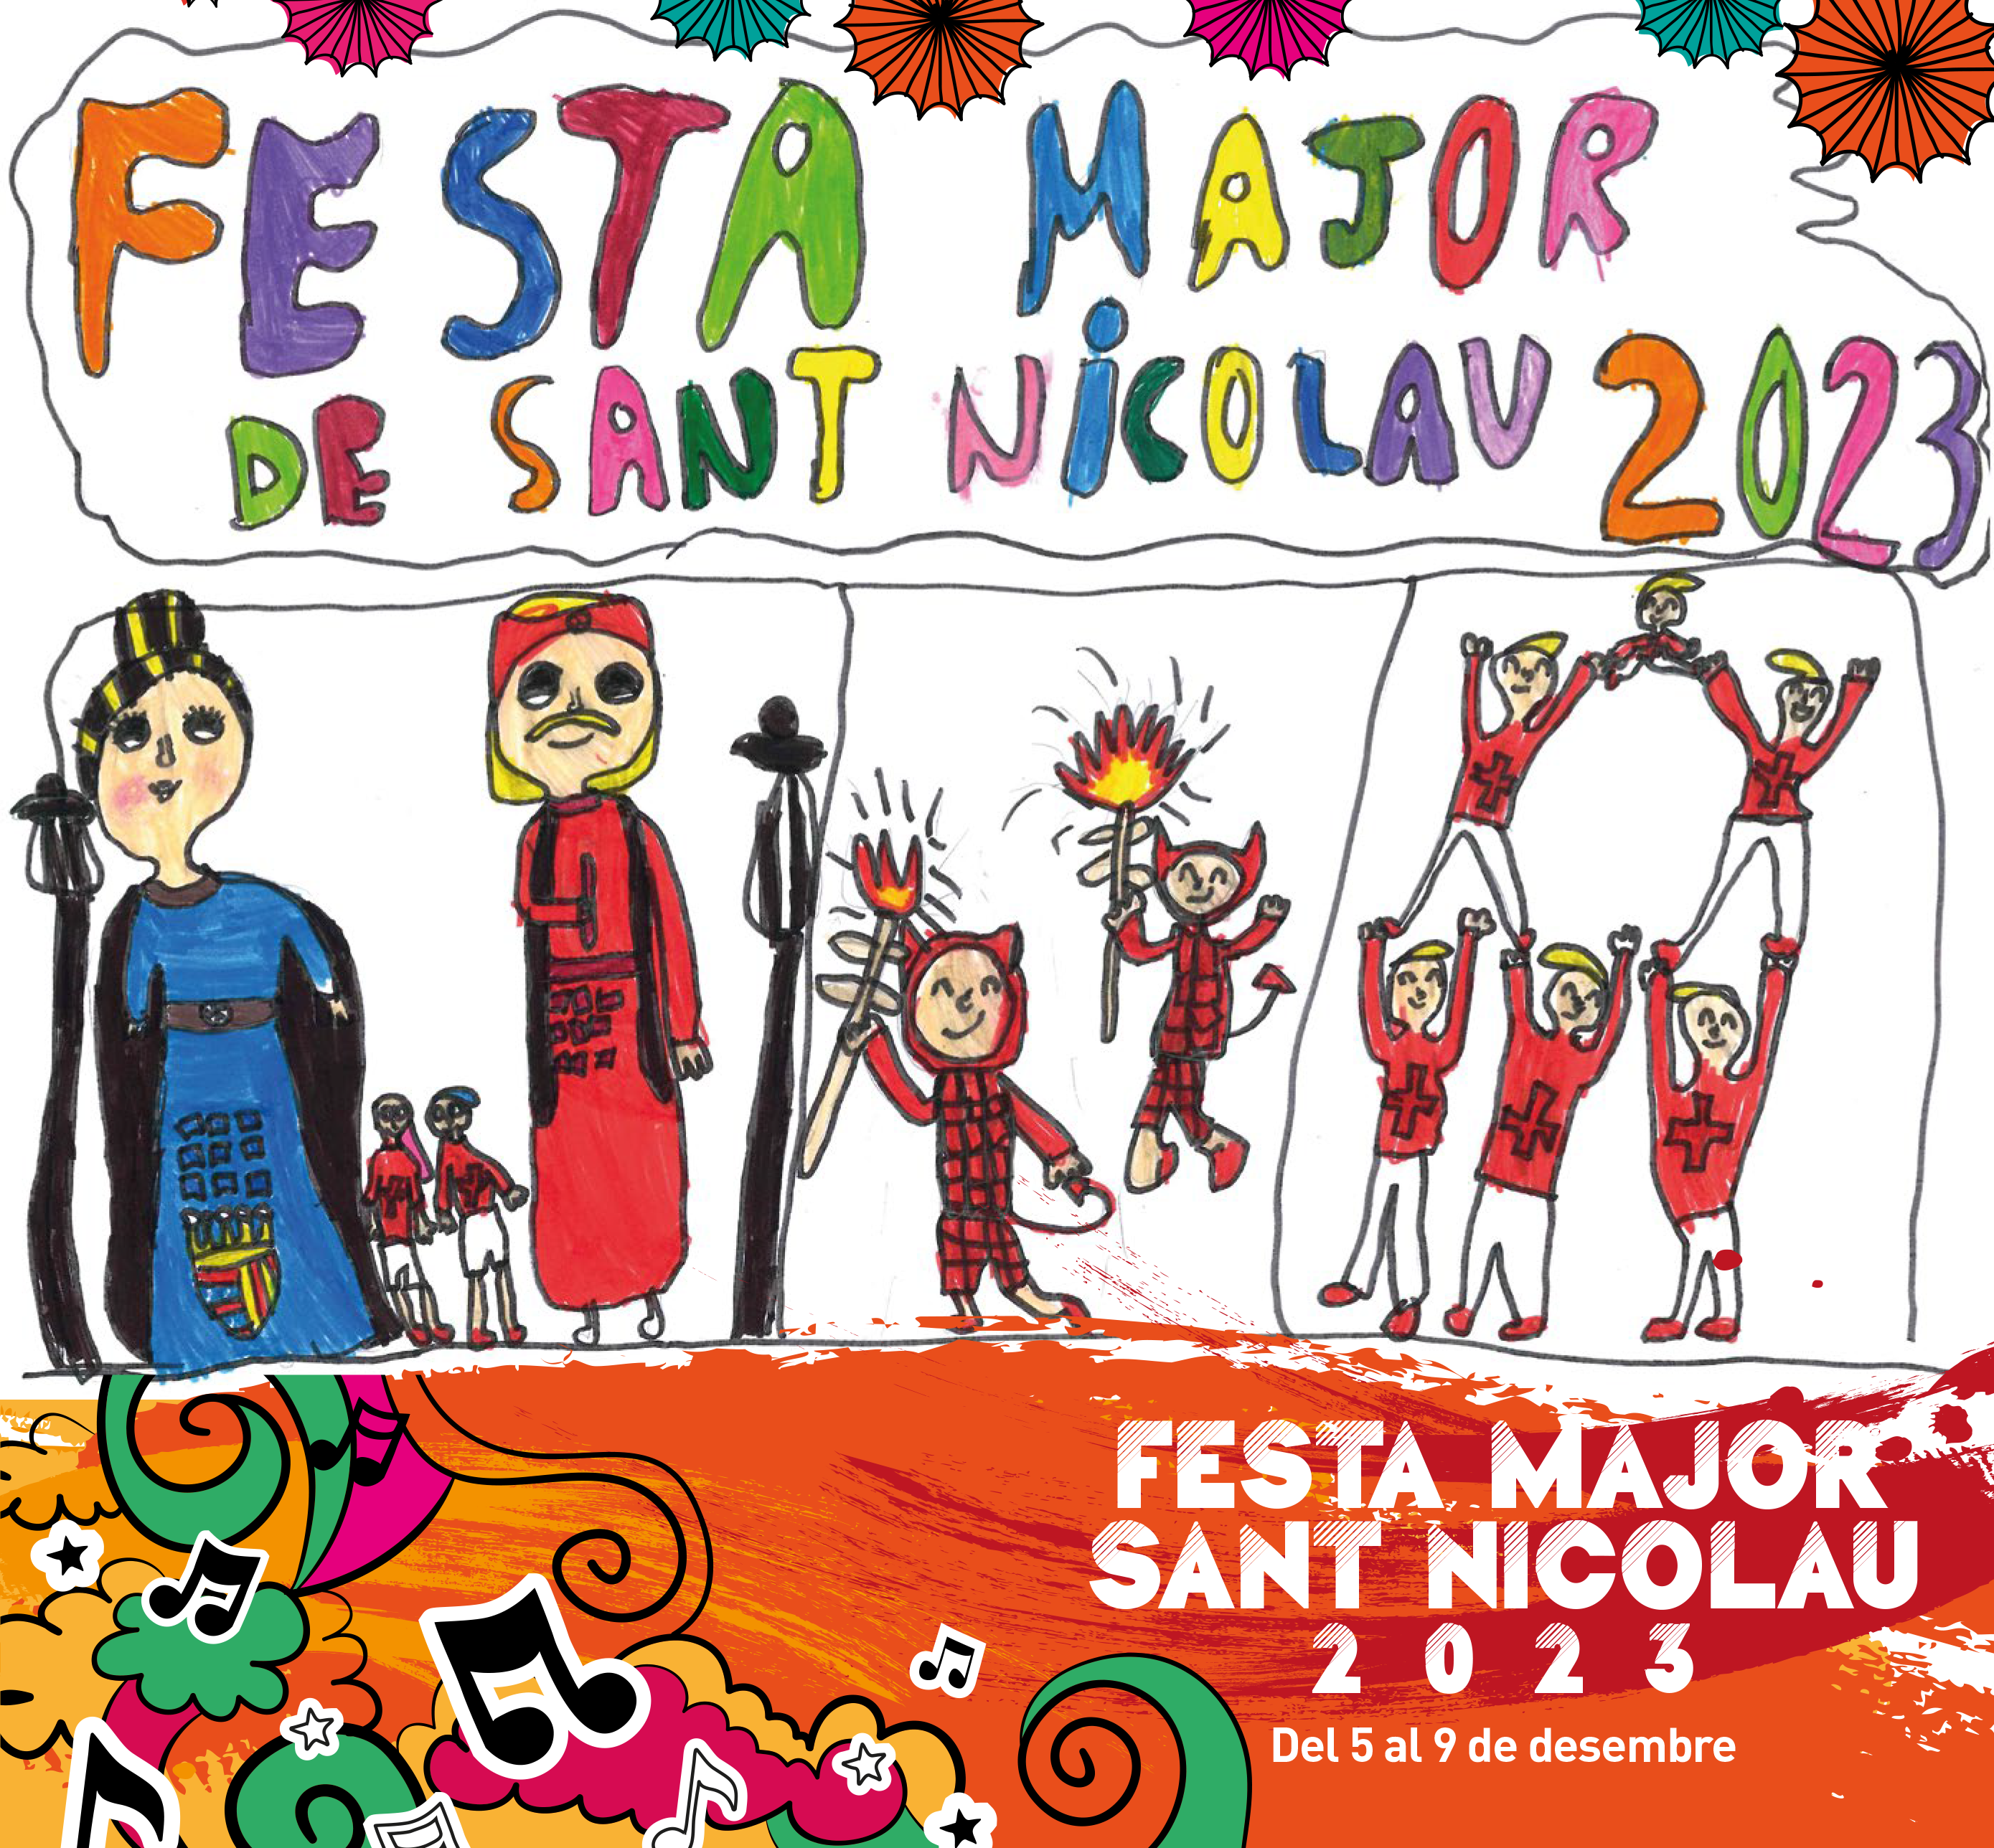 Festa major Sant Nicolau: Concert i ball de festa major